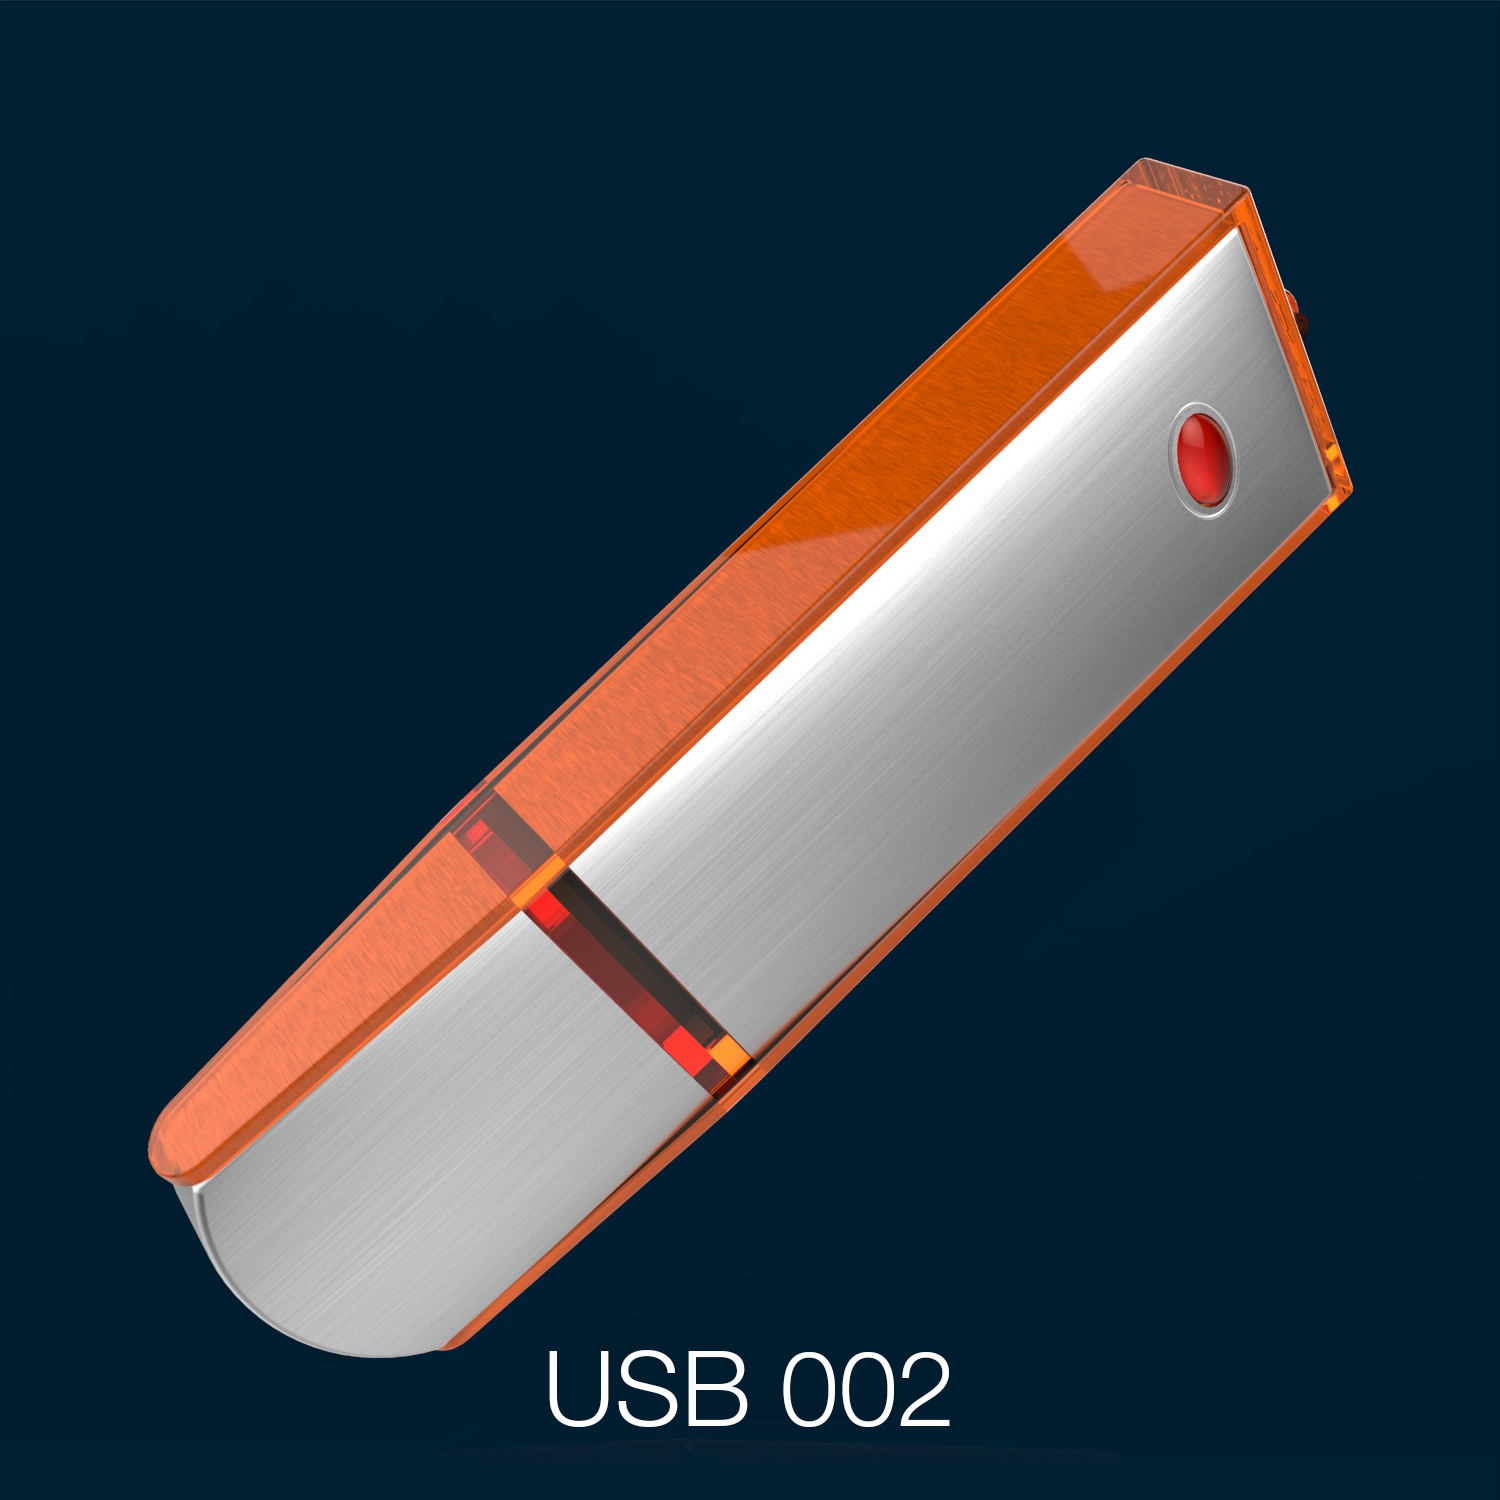 USB 002